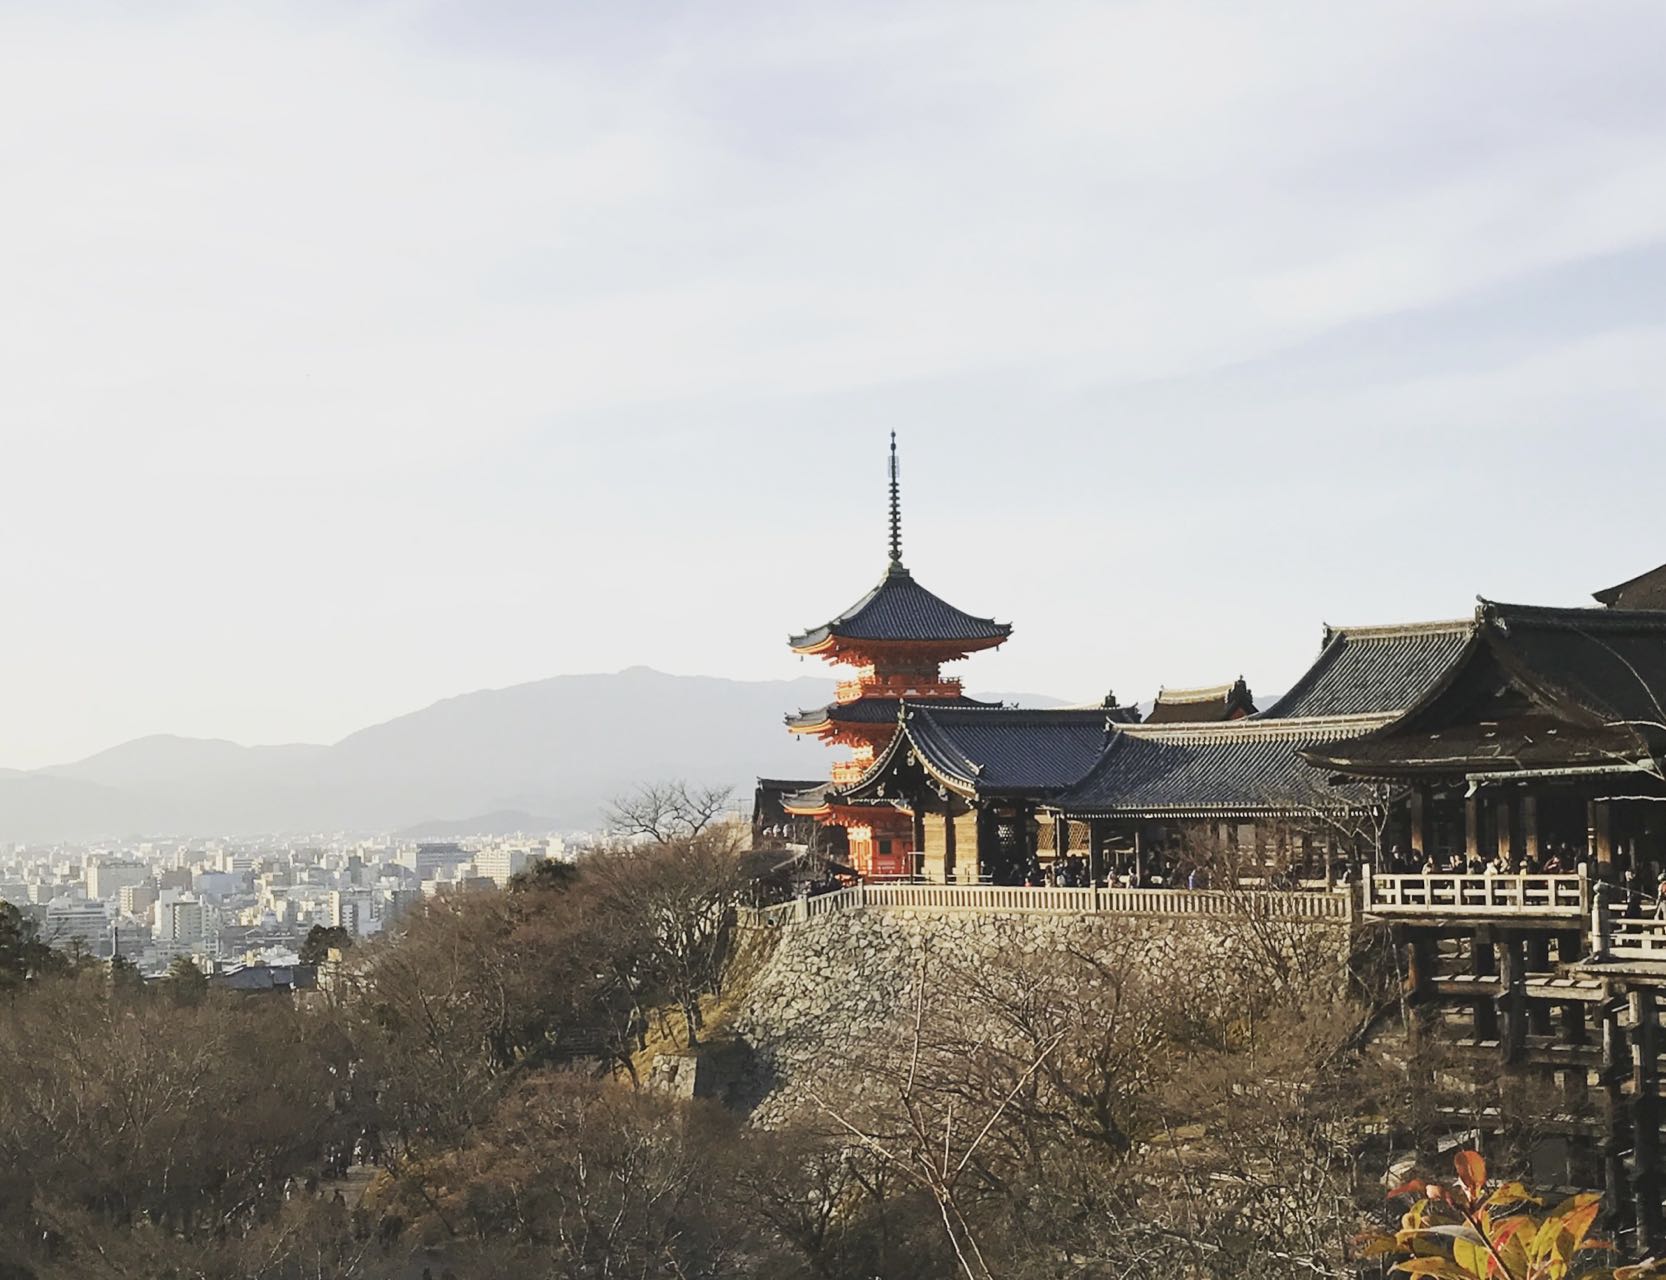 Guangneng's Kyoto